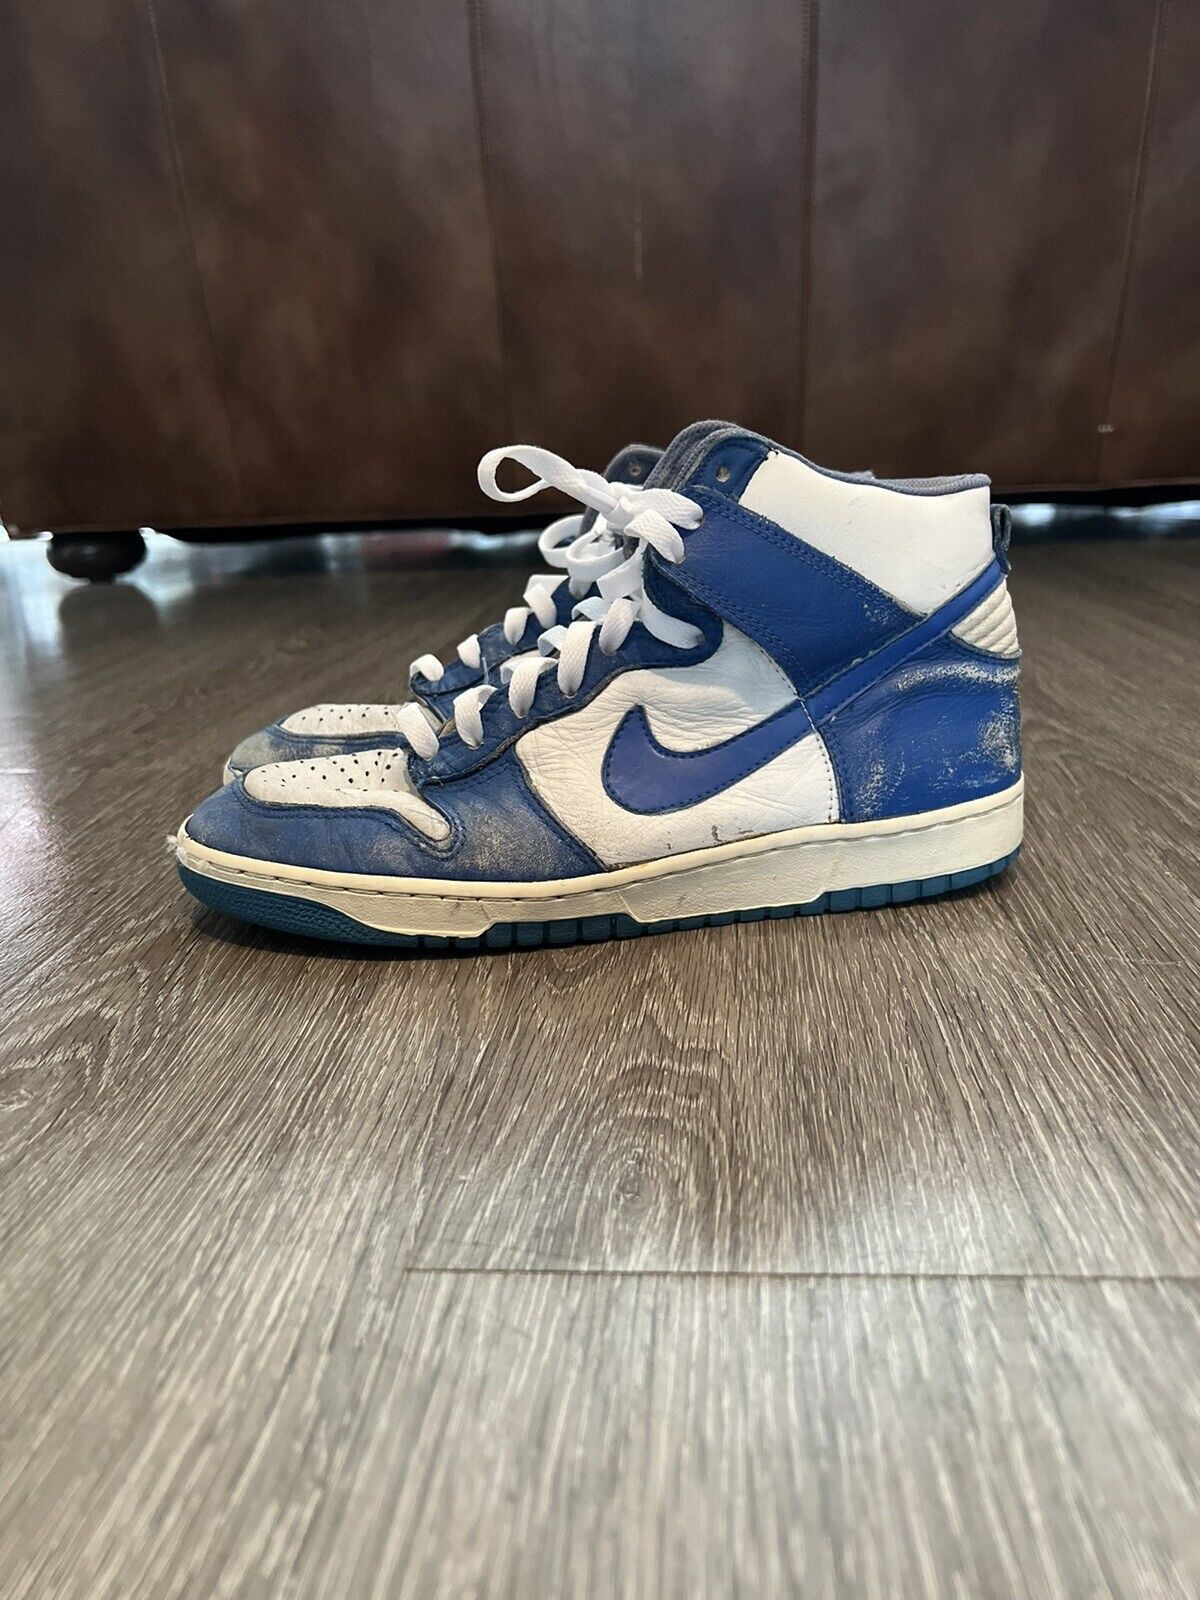 1985 Original Nike Dunks, available on eBay